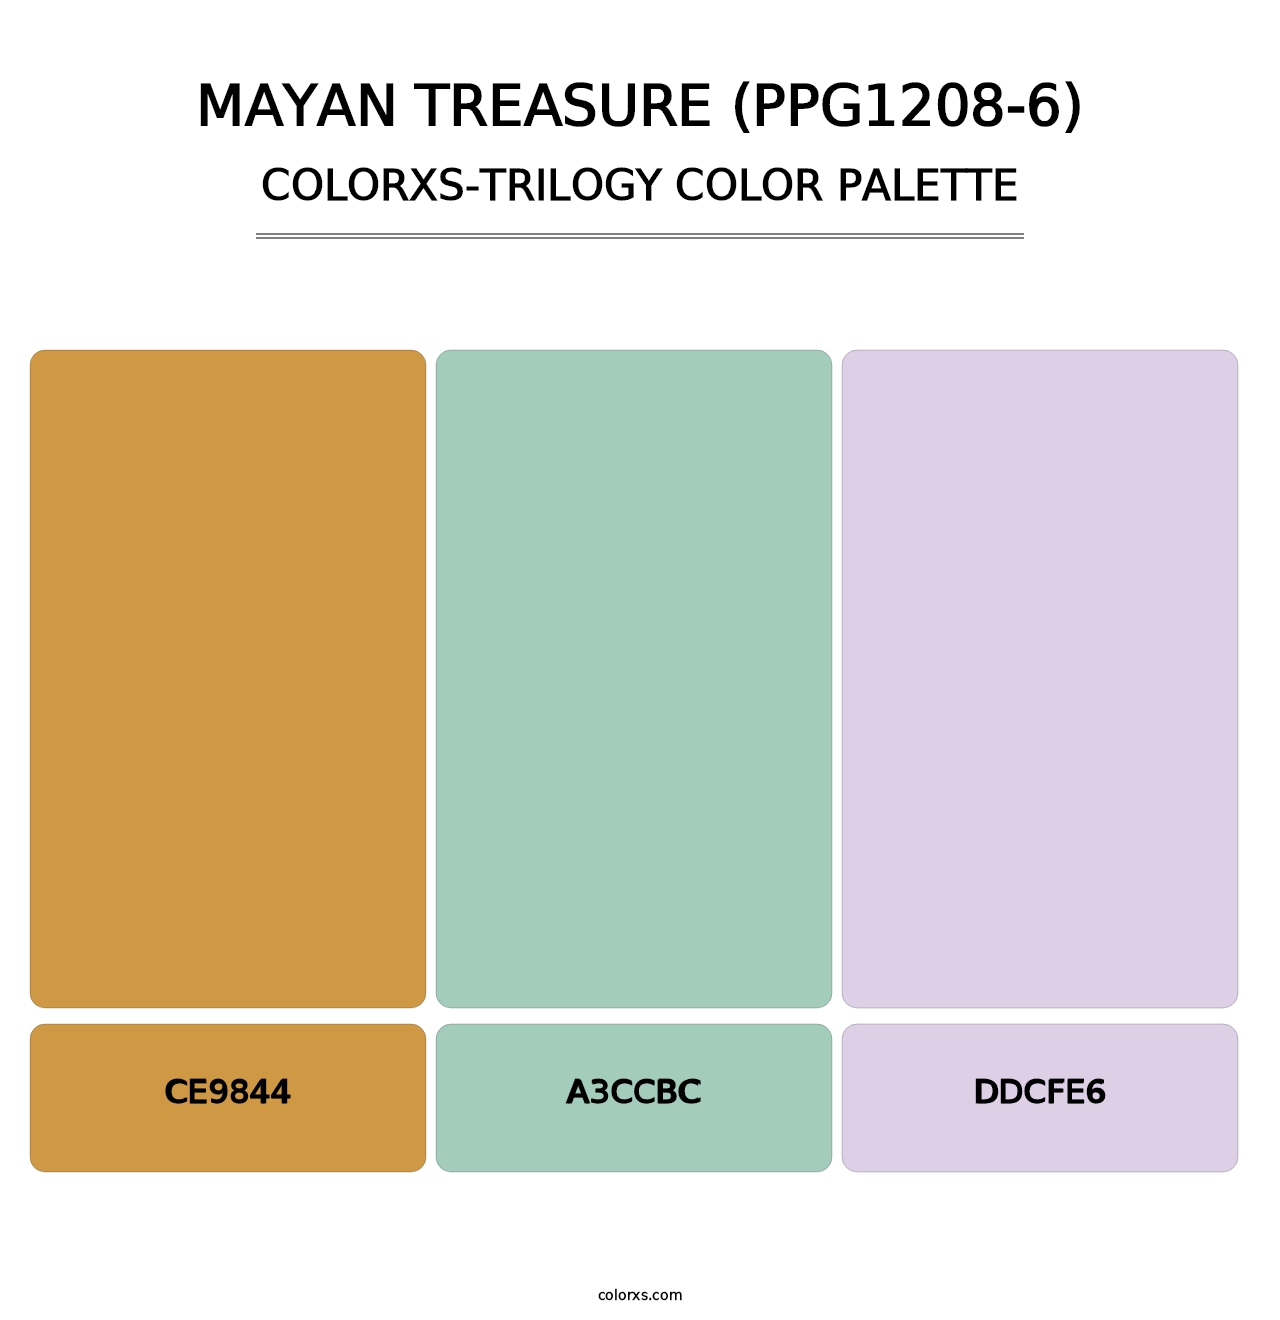 Mayan Treasure (PPG1208-6) - Colorxs Trilogy Palette